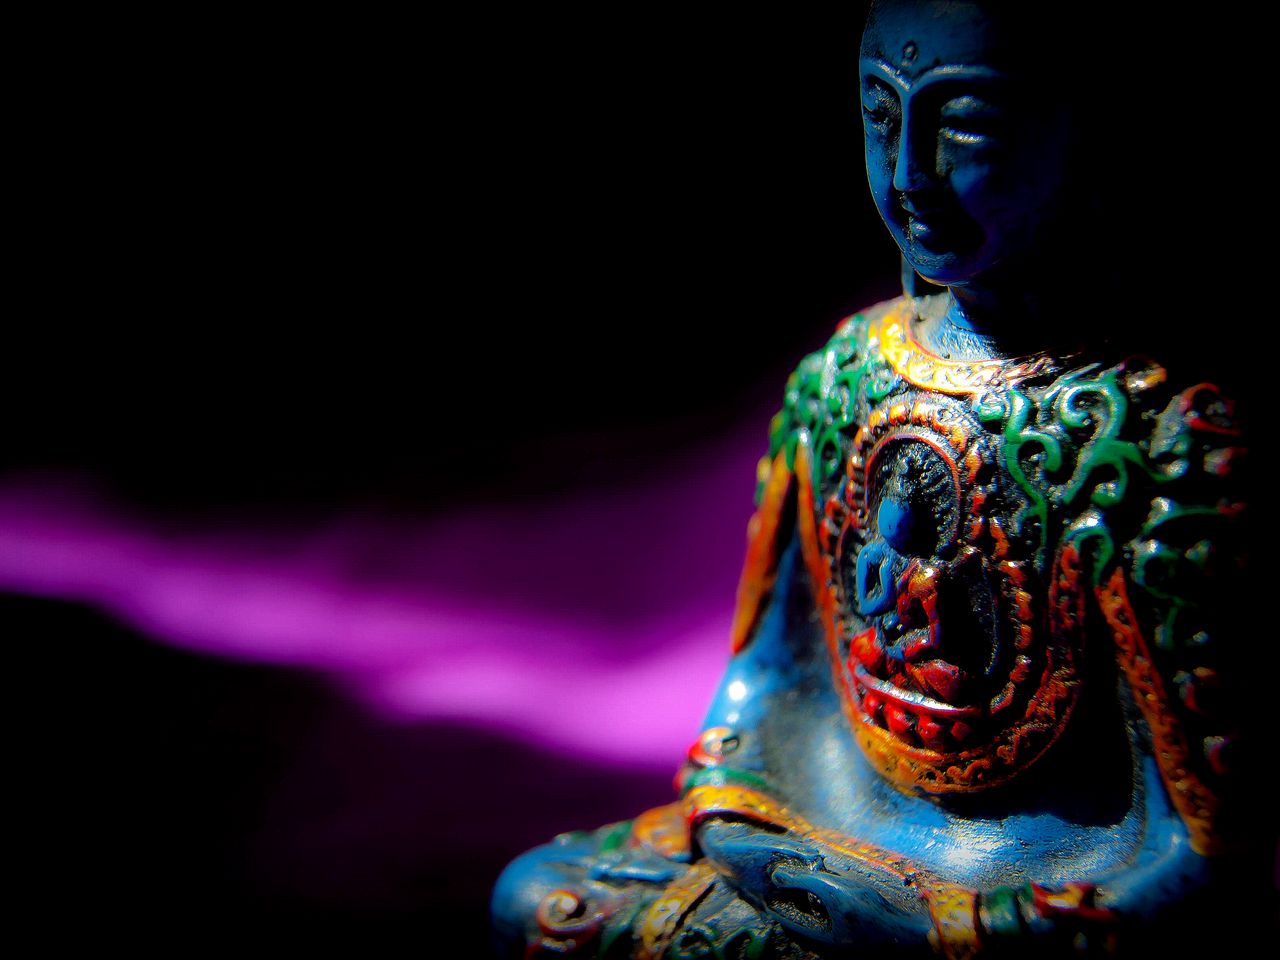 351411 Buddha Meditating Images Stock Photos  Vectors  Shutterstock